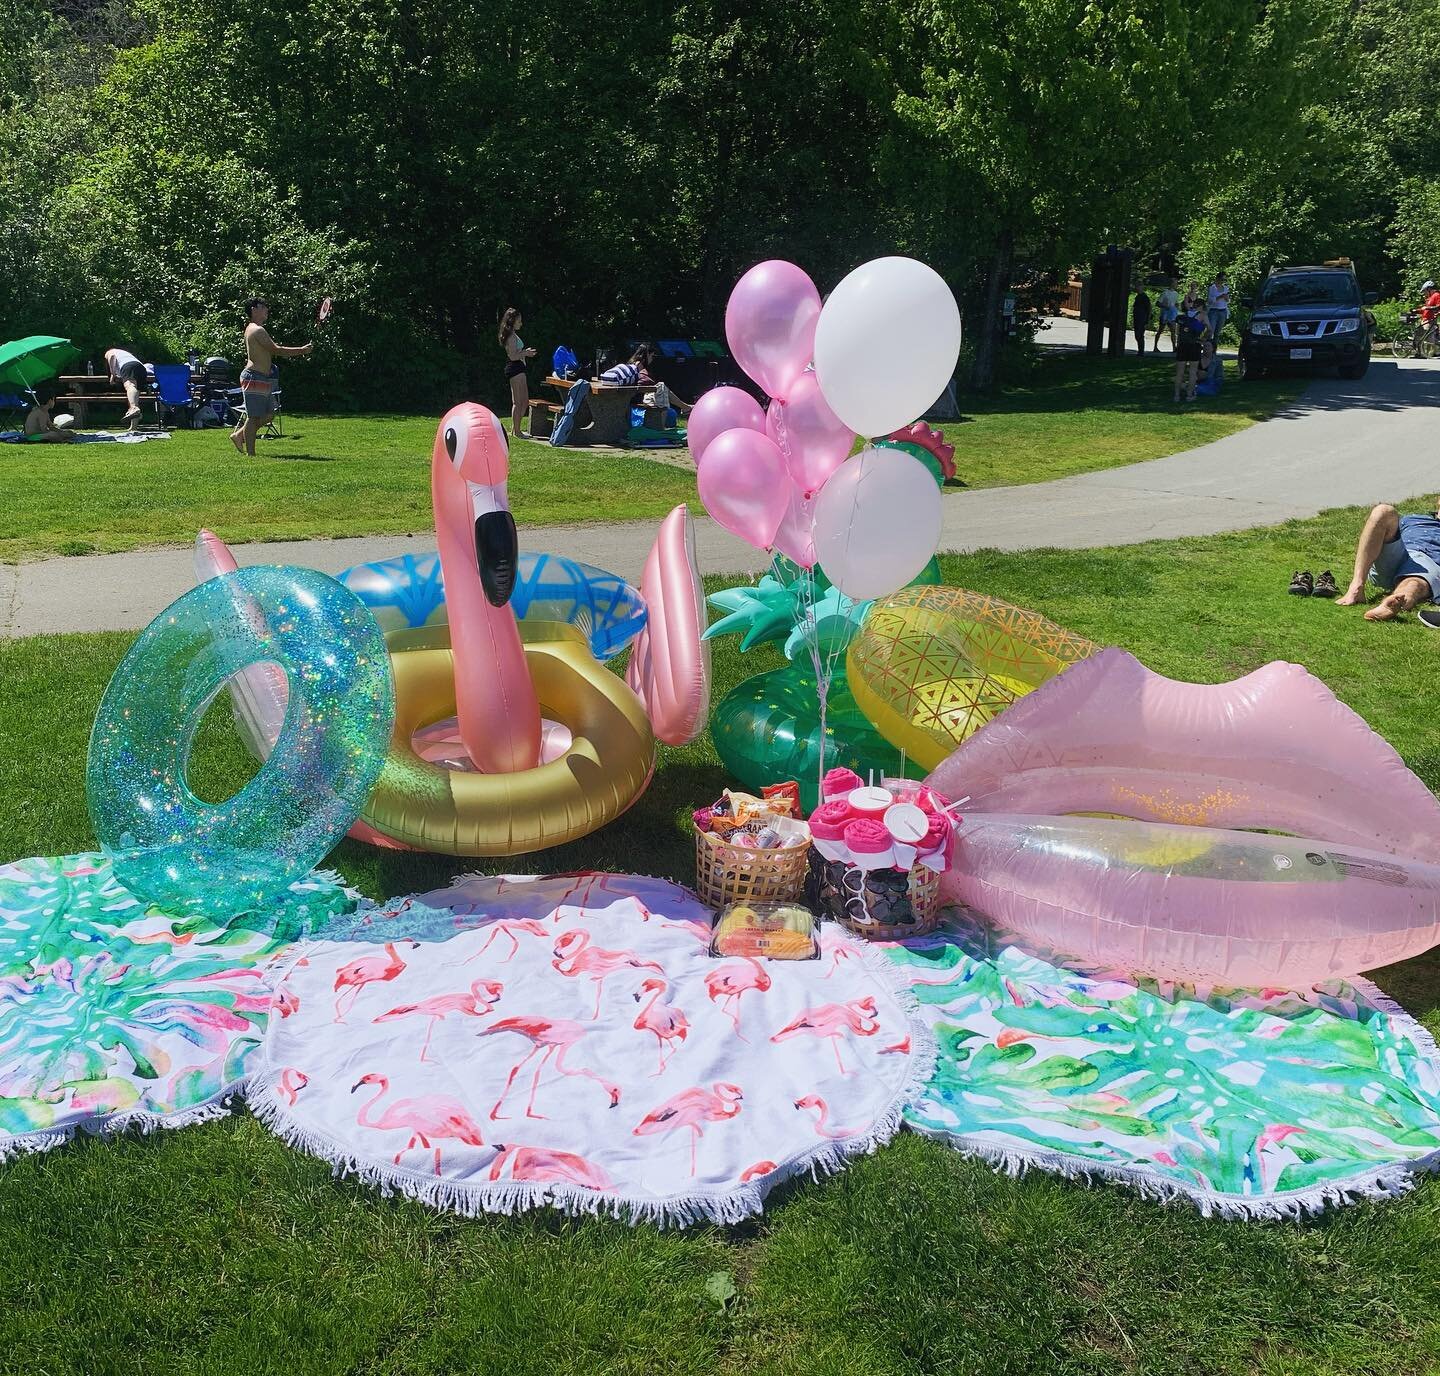 Beach Party Season Is ON!!! 🏖 🦩 ☀️ #bachelorette #bacheloretteparty #beachelorettebeachparty #flamingo #whistlerbc #summervibes #mountainlife #bridetobe #girlsparty #sunshine